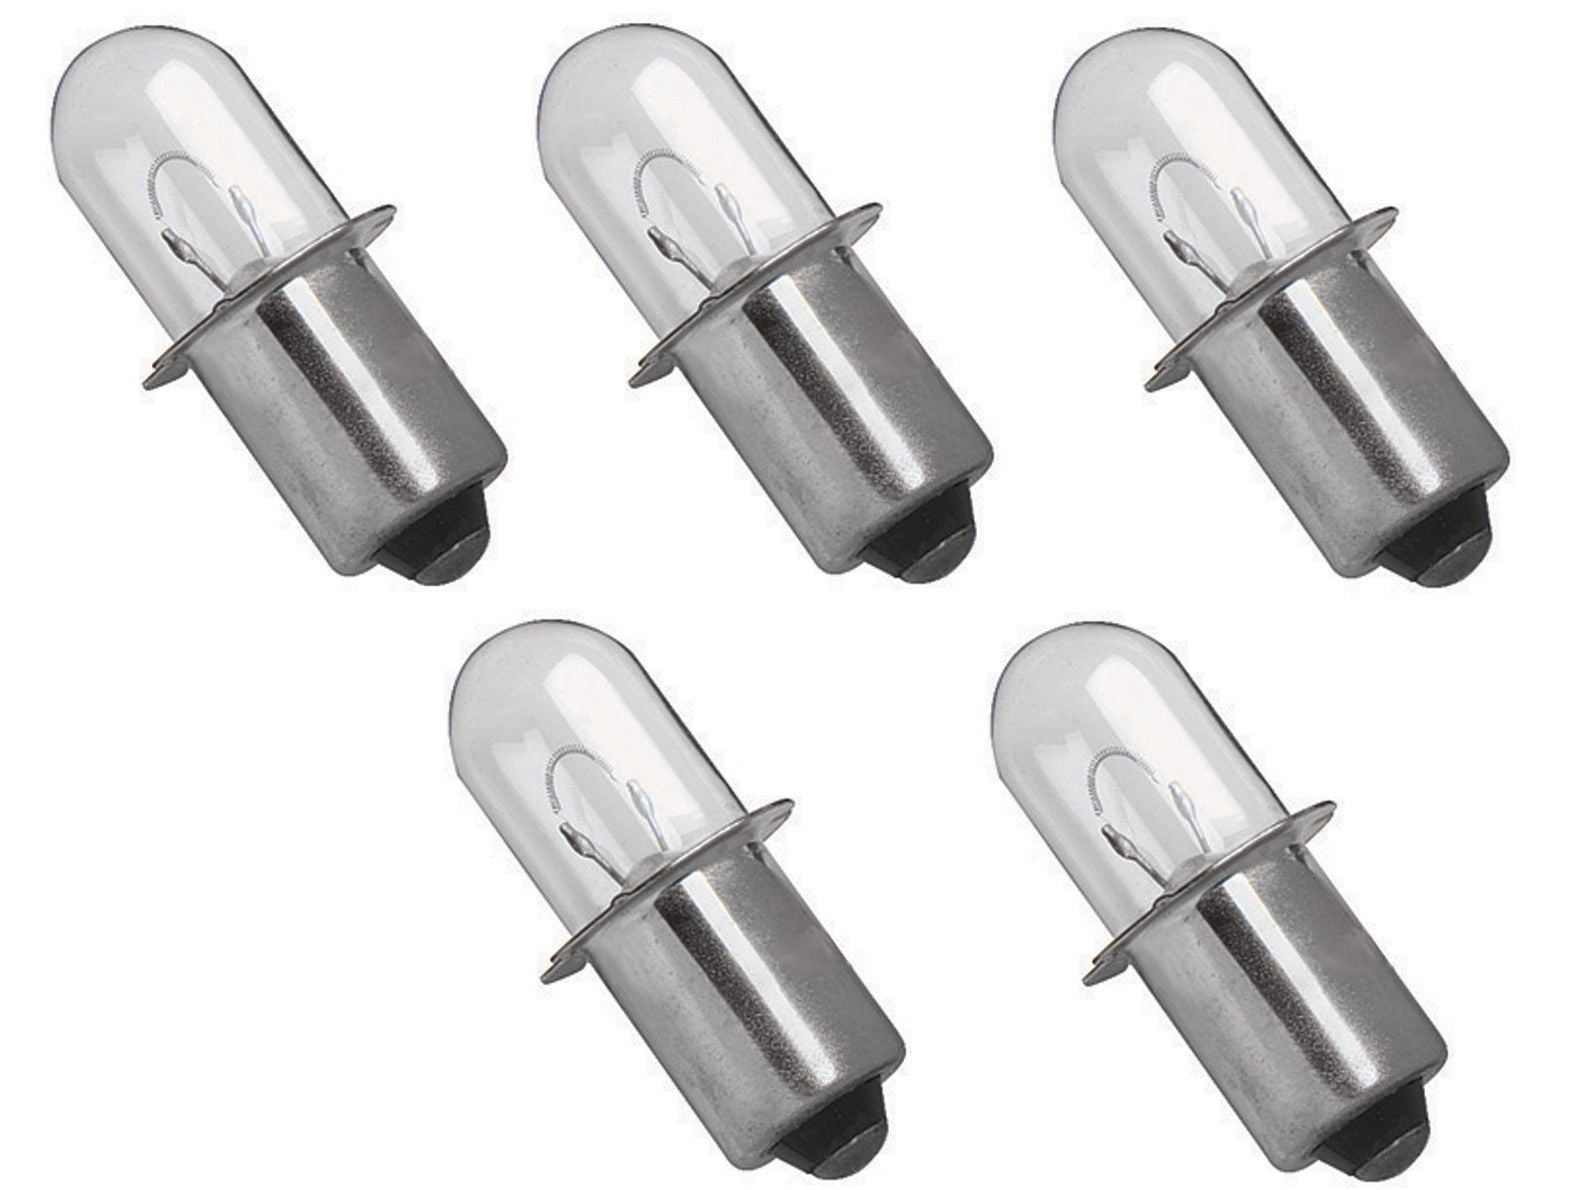 MAKITA 12v VOLT Cordless Flashlight XENON Replacement Bulb DEWALT RYOBI 2 